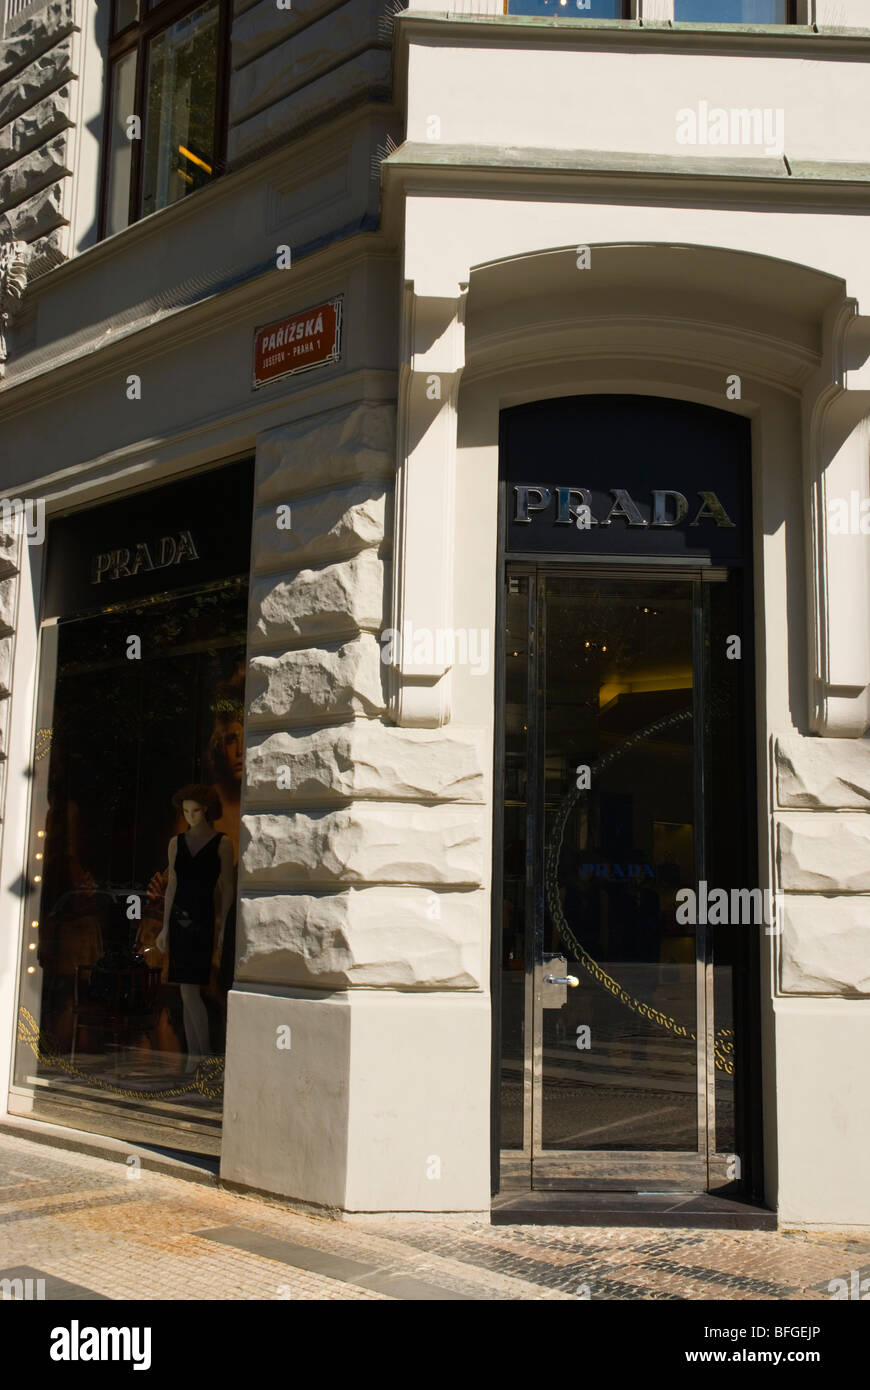 Prada fashion shop hi-res stock photography and images - Alamy